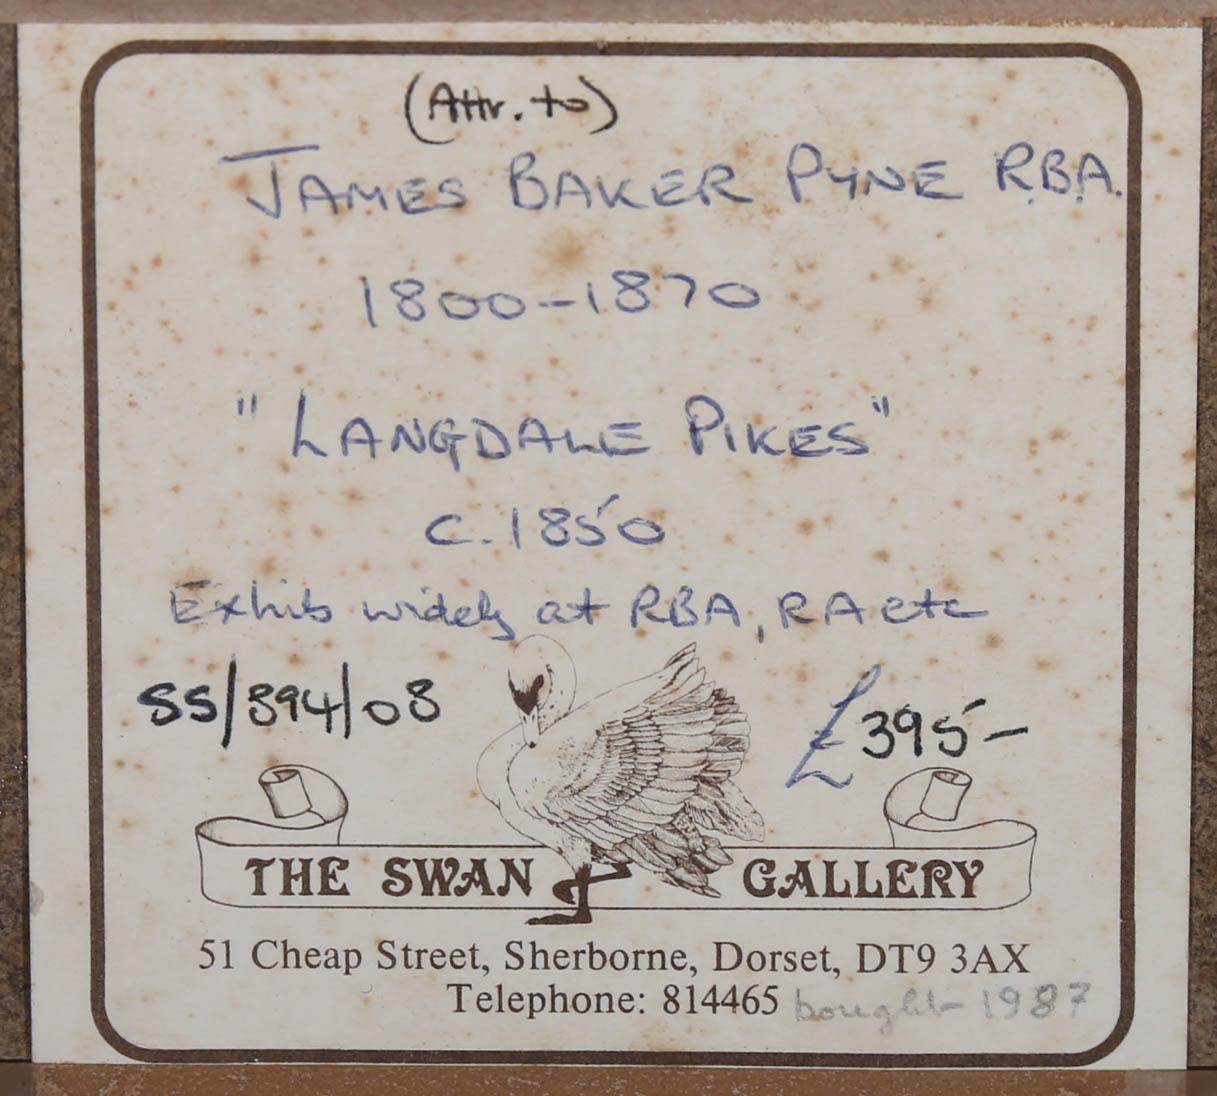 Attrib James Baker Pyne RBA (1800-1979) - c.1950 Watercolour, Langdale Pikes 4